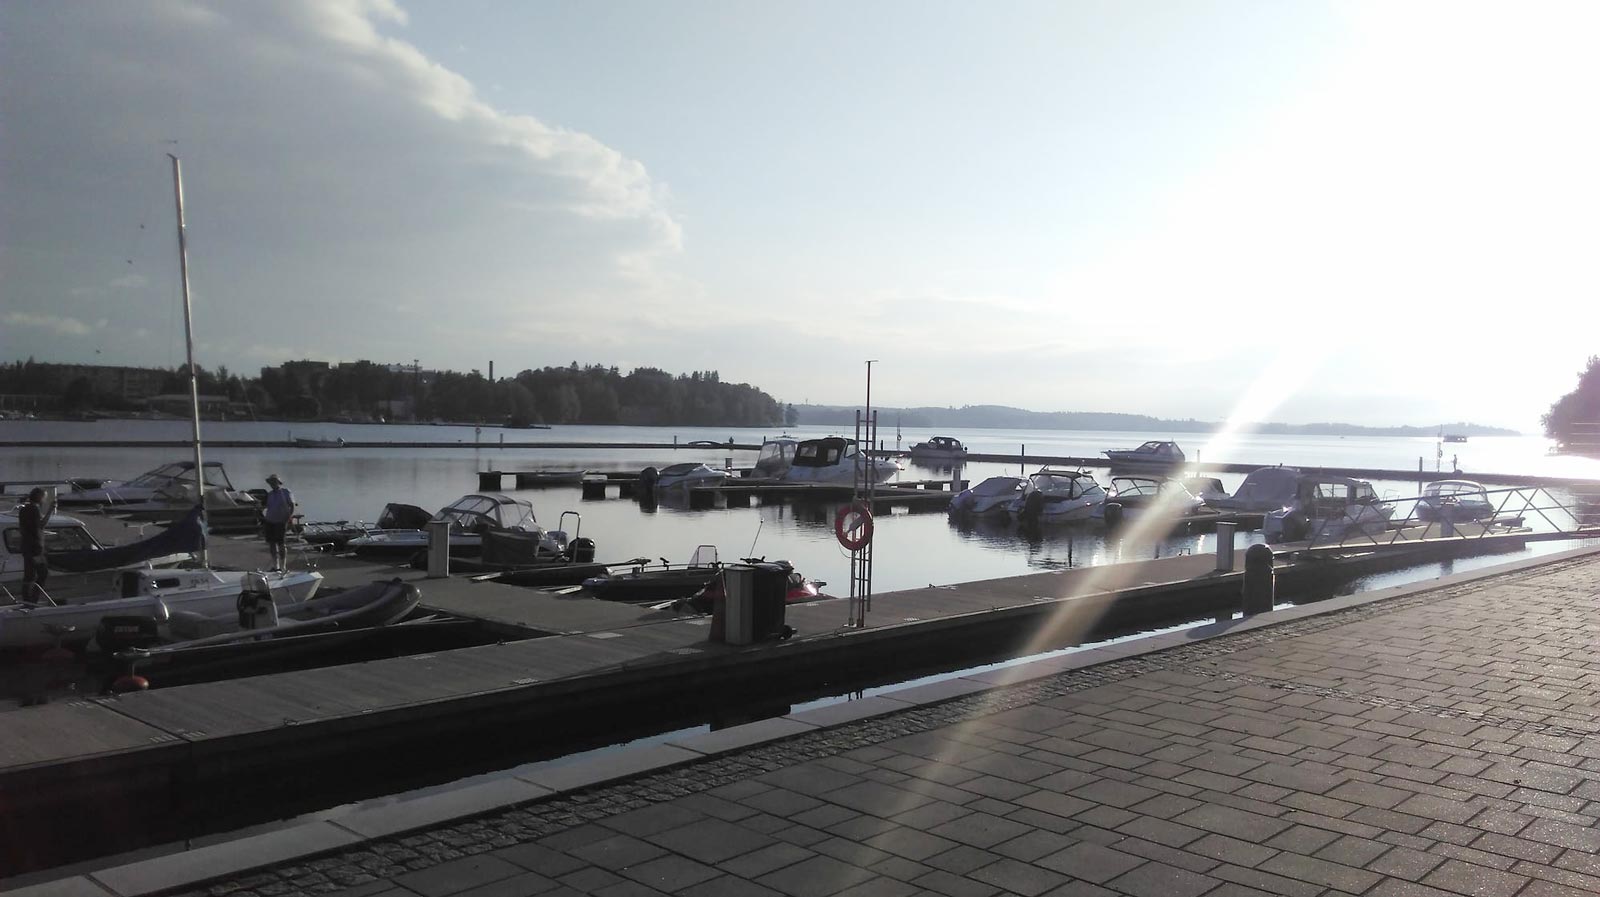 Nature in Finland - Boat harbor